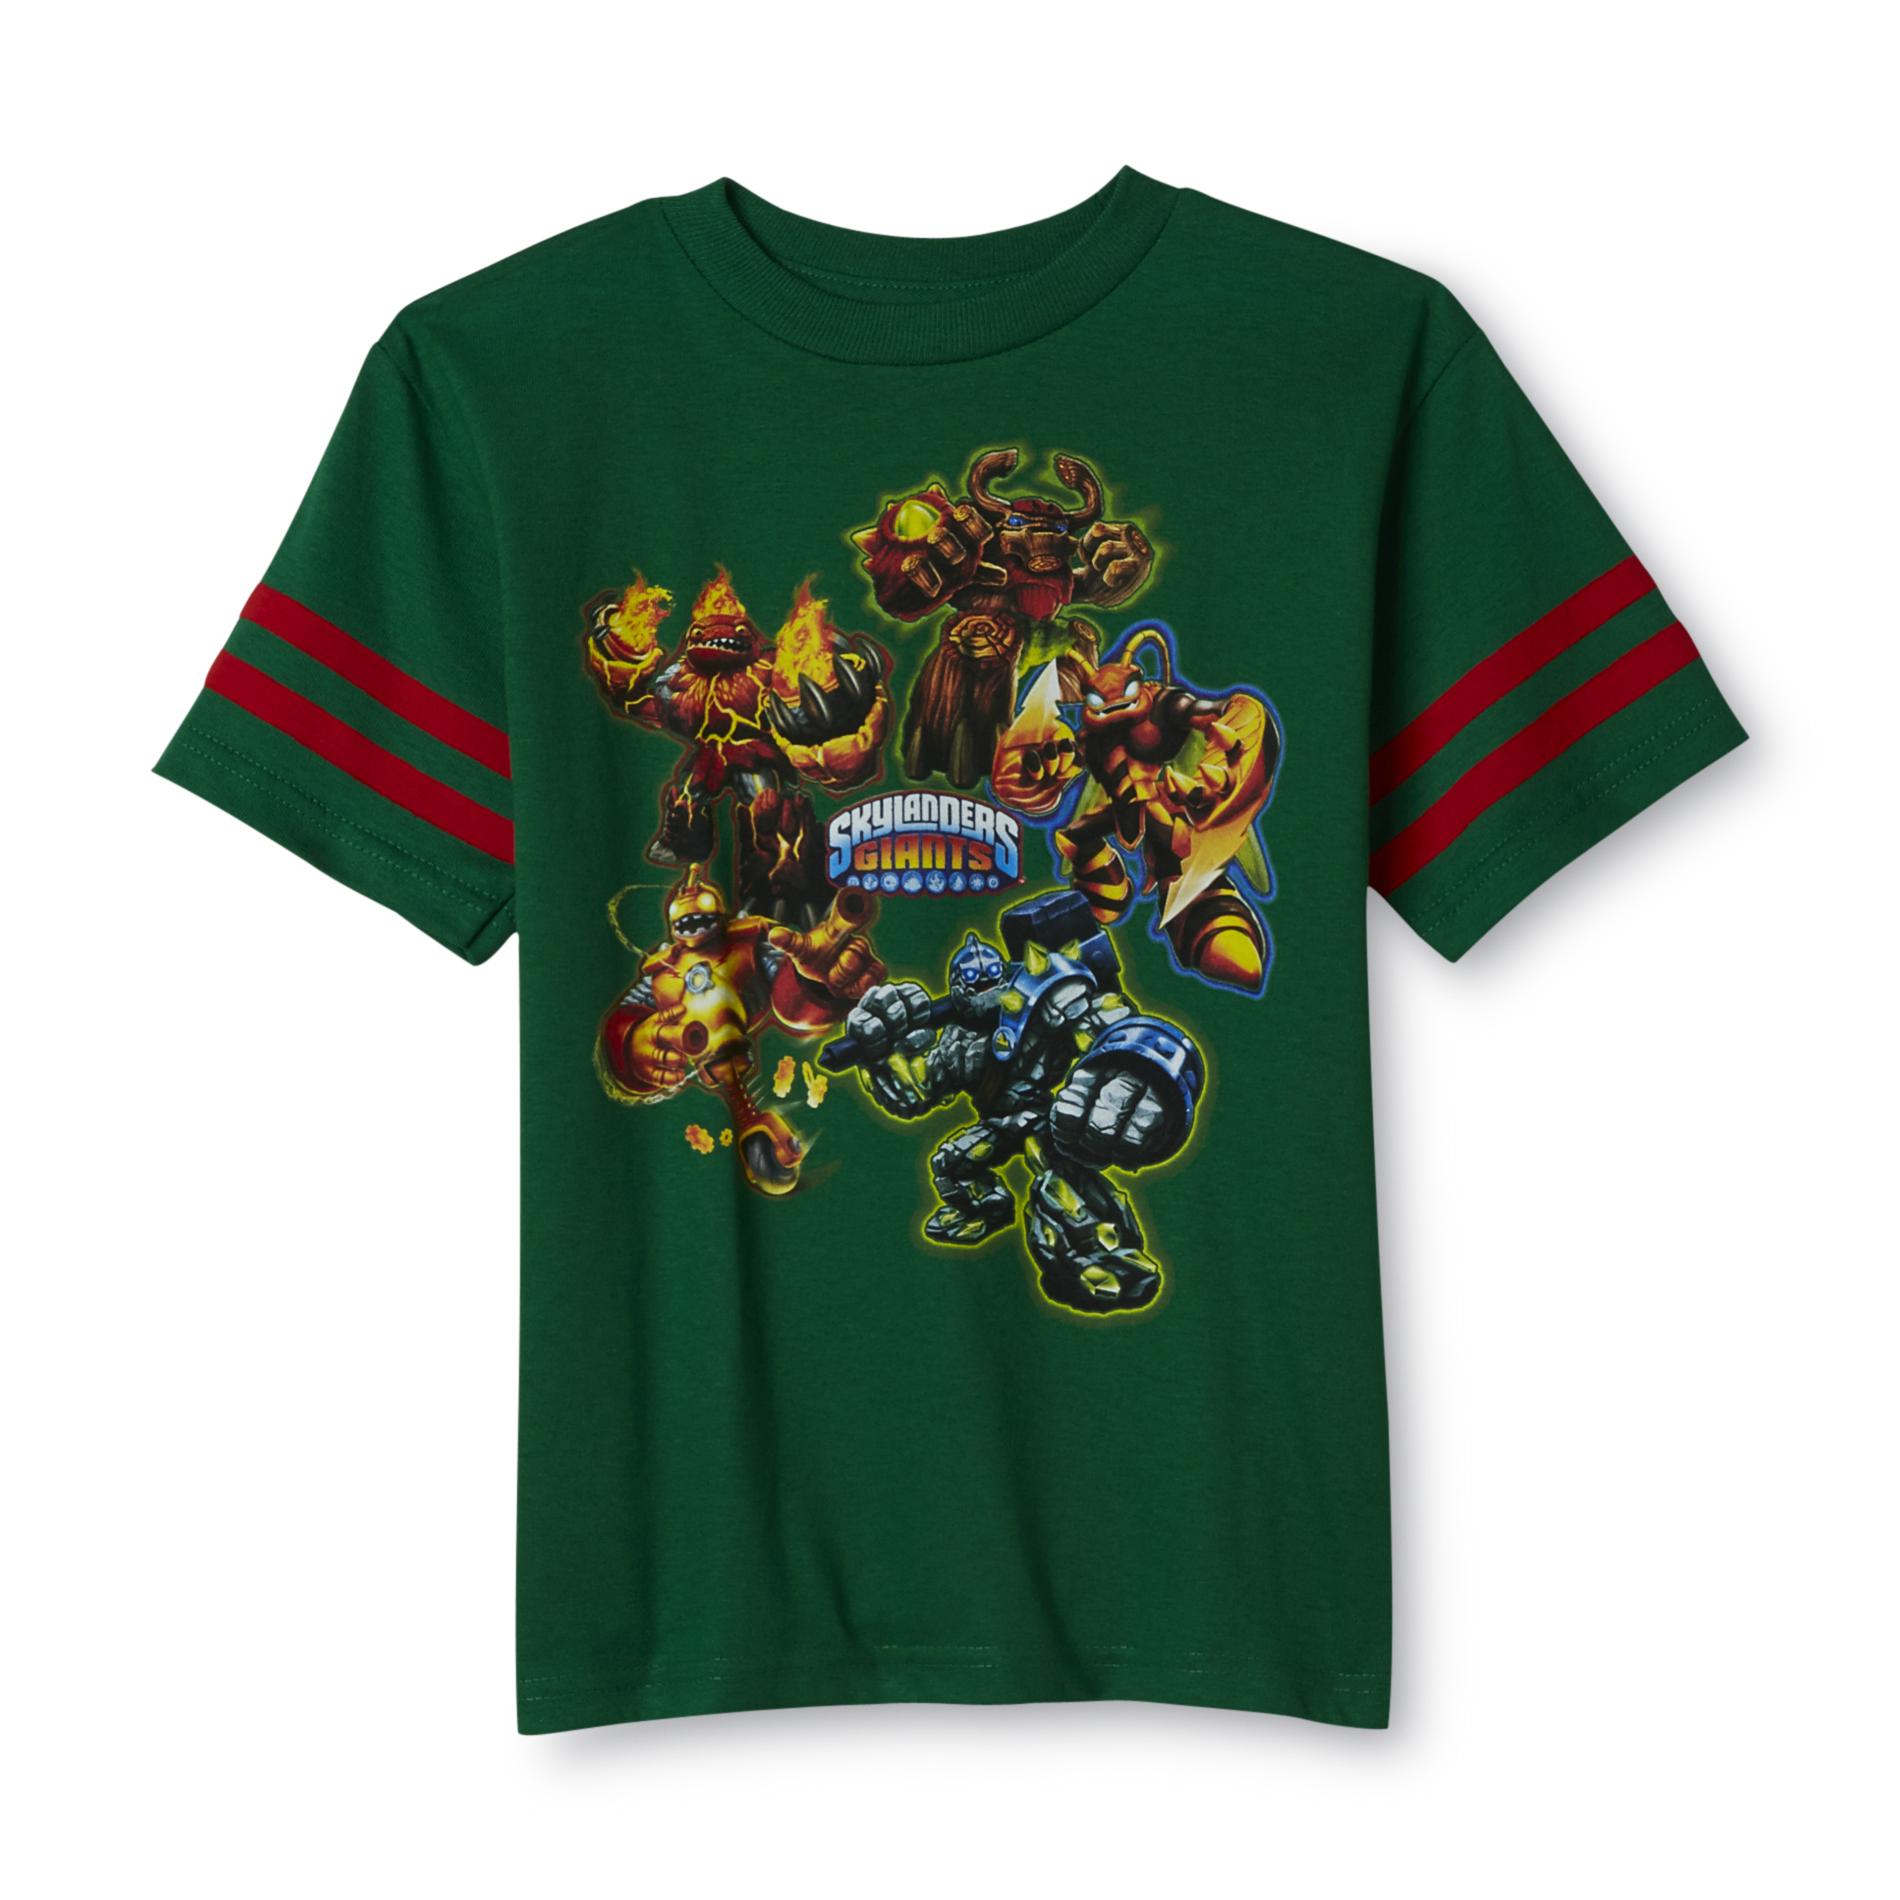 Activision Boy's Graphic T-Shirt - Skylanders Giants